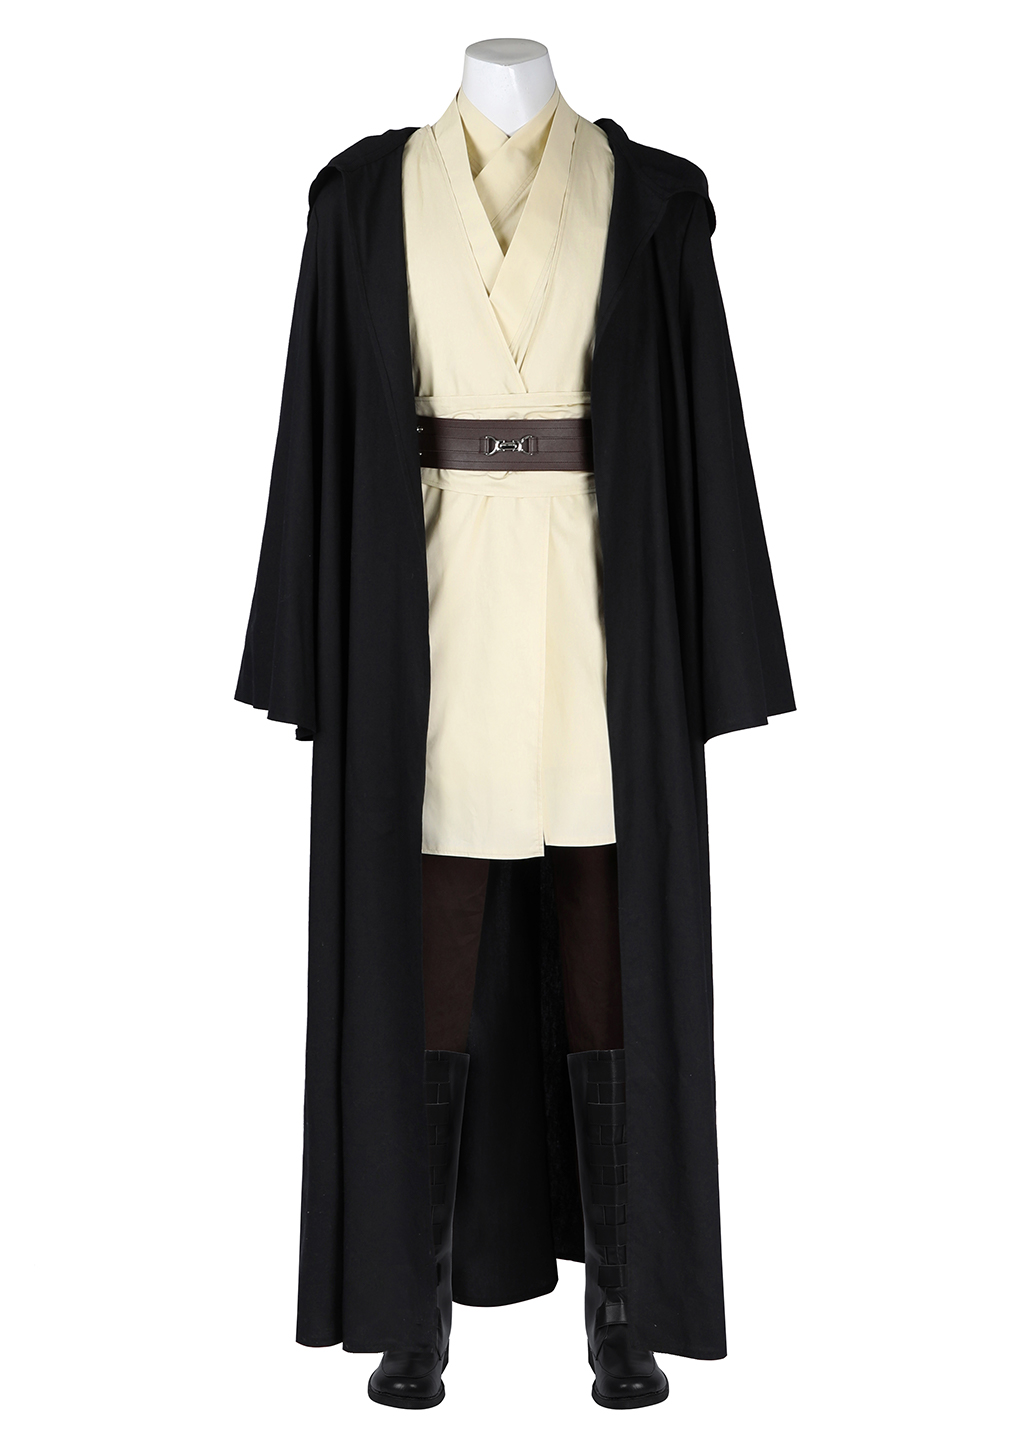 Qui-Gon jinn Costume Star Wars Episode I The Phantom Menace Suit Cosplay Ver.1